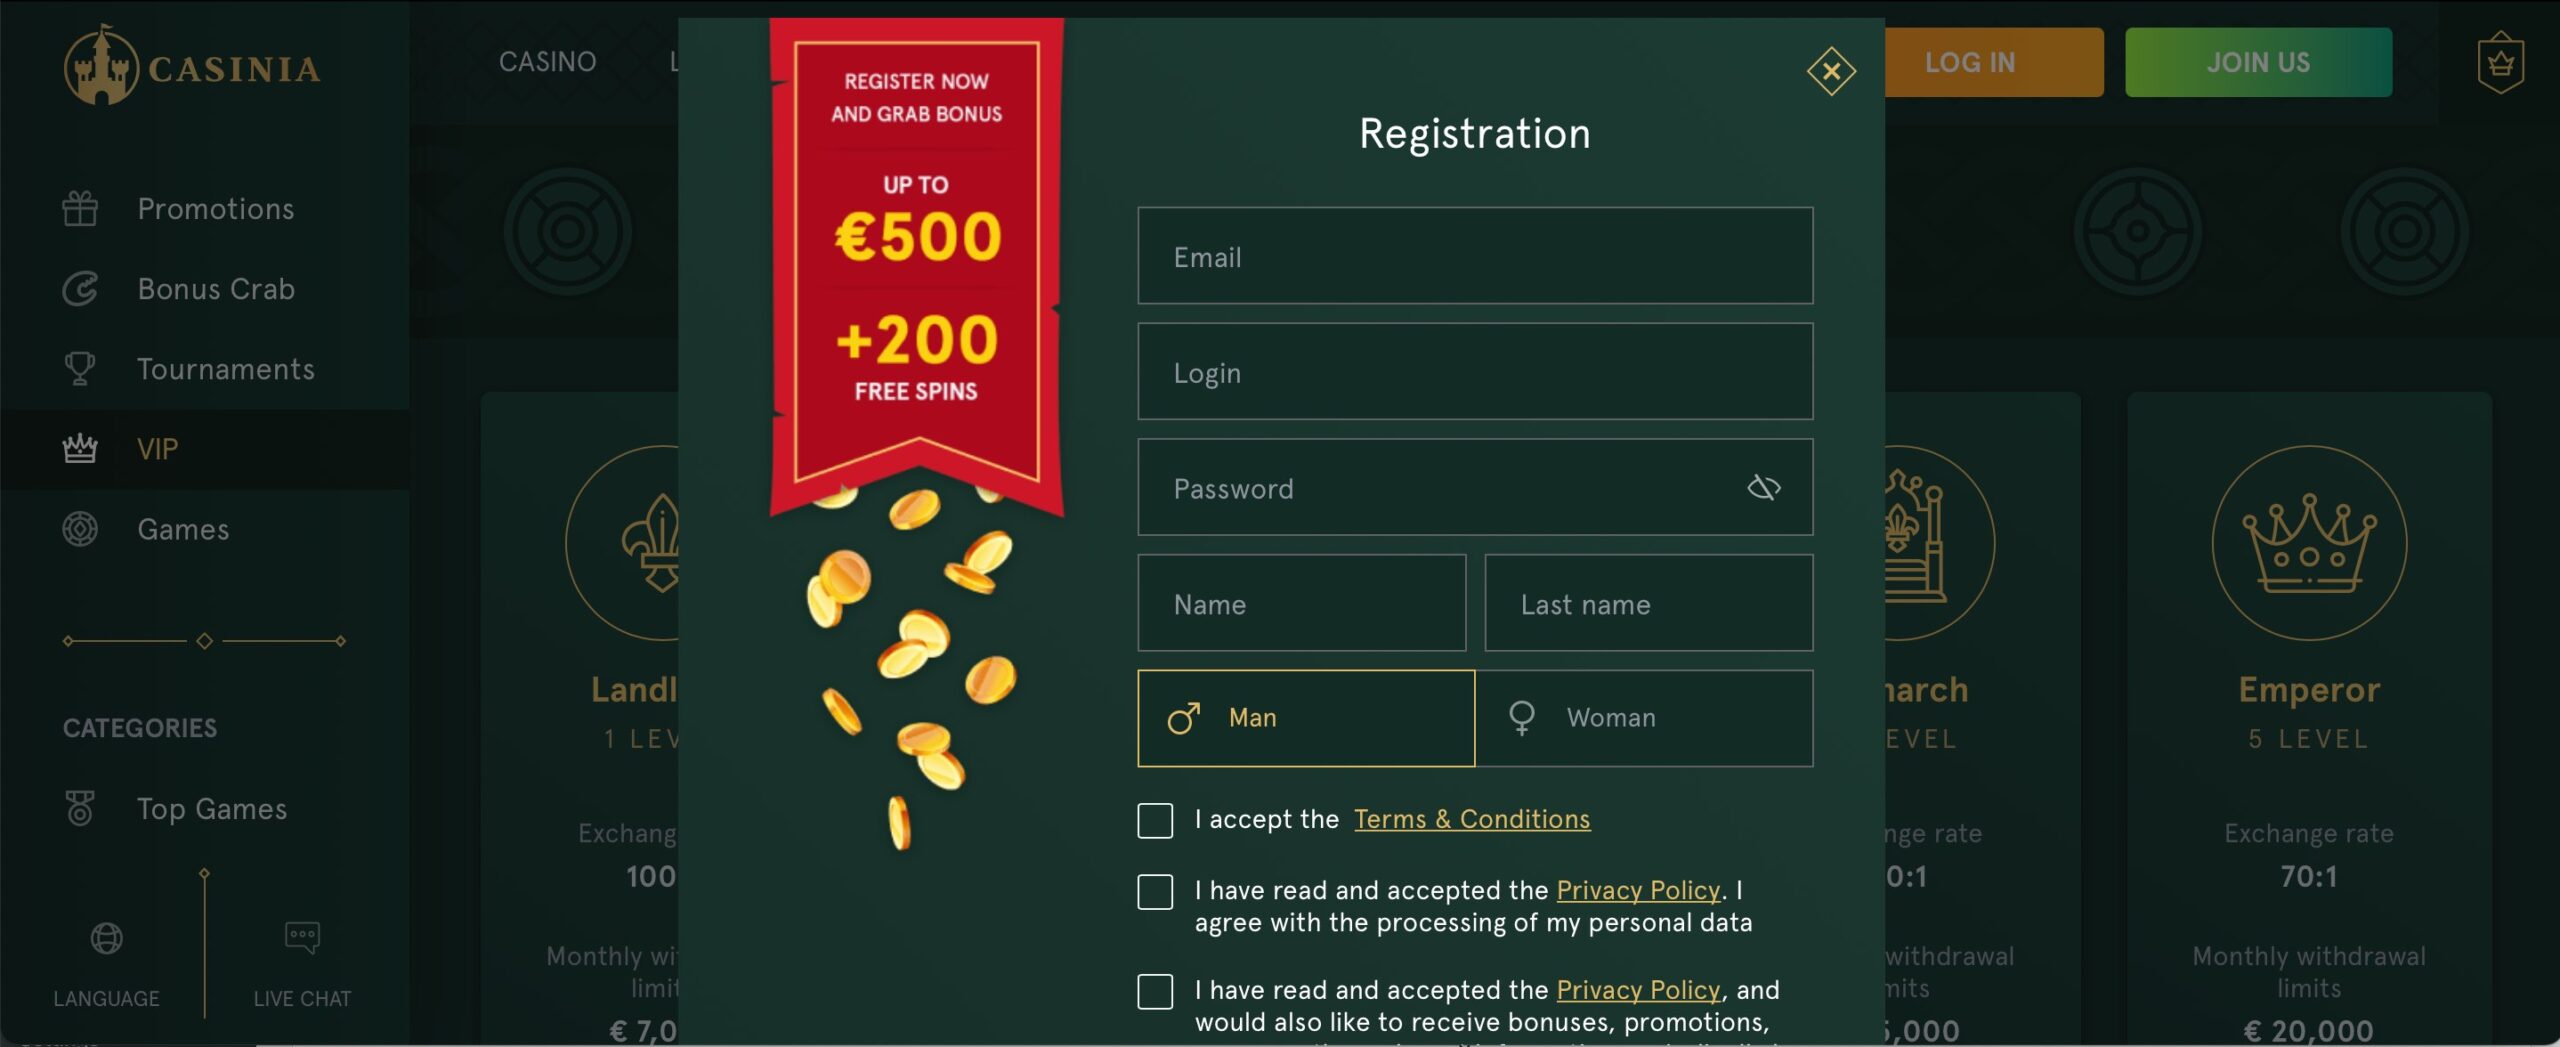 Casinia Casino Registration